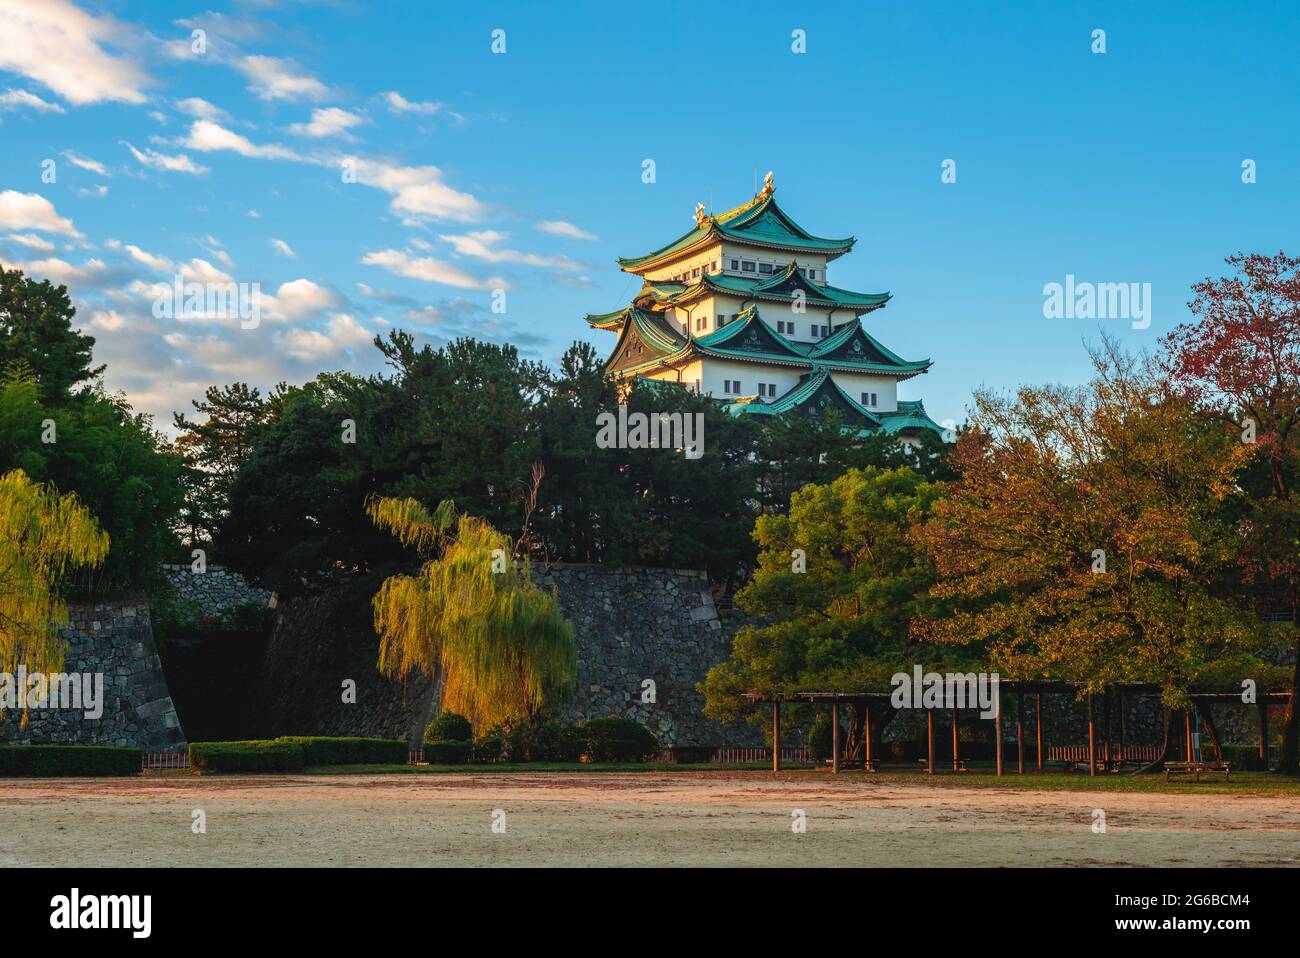 Main keep of Nagoya Castle, a Japanese castle in Nagoya, Japan Stock Photo